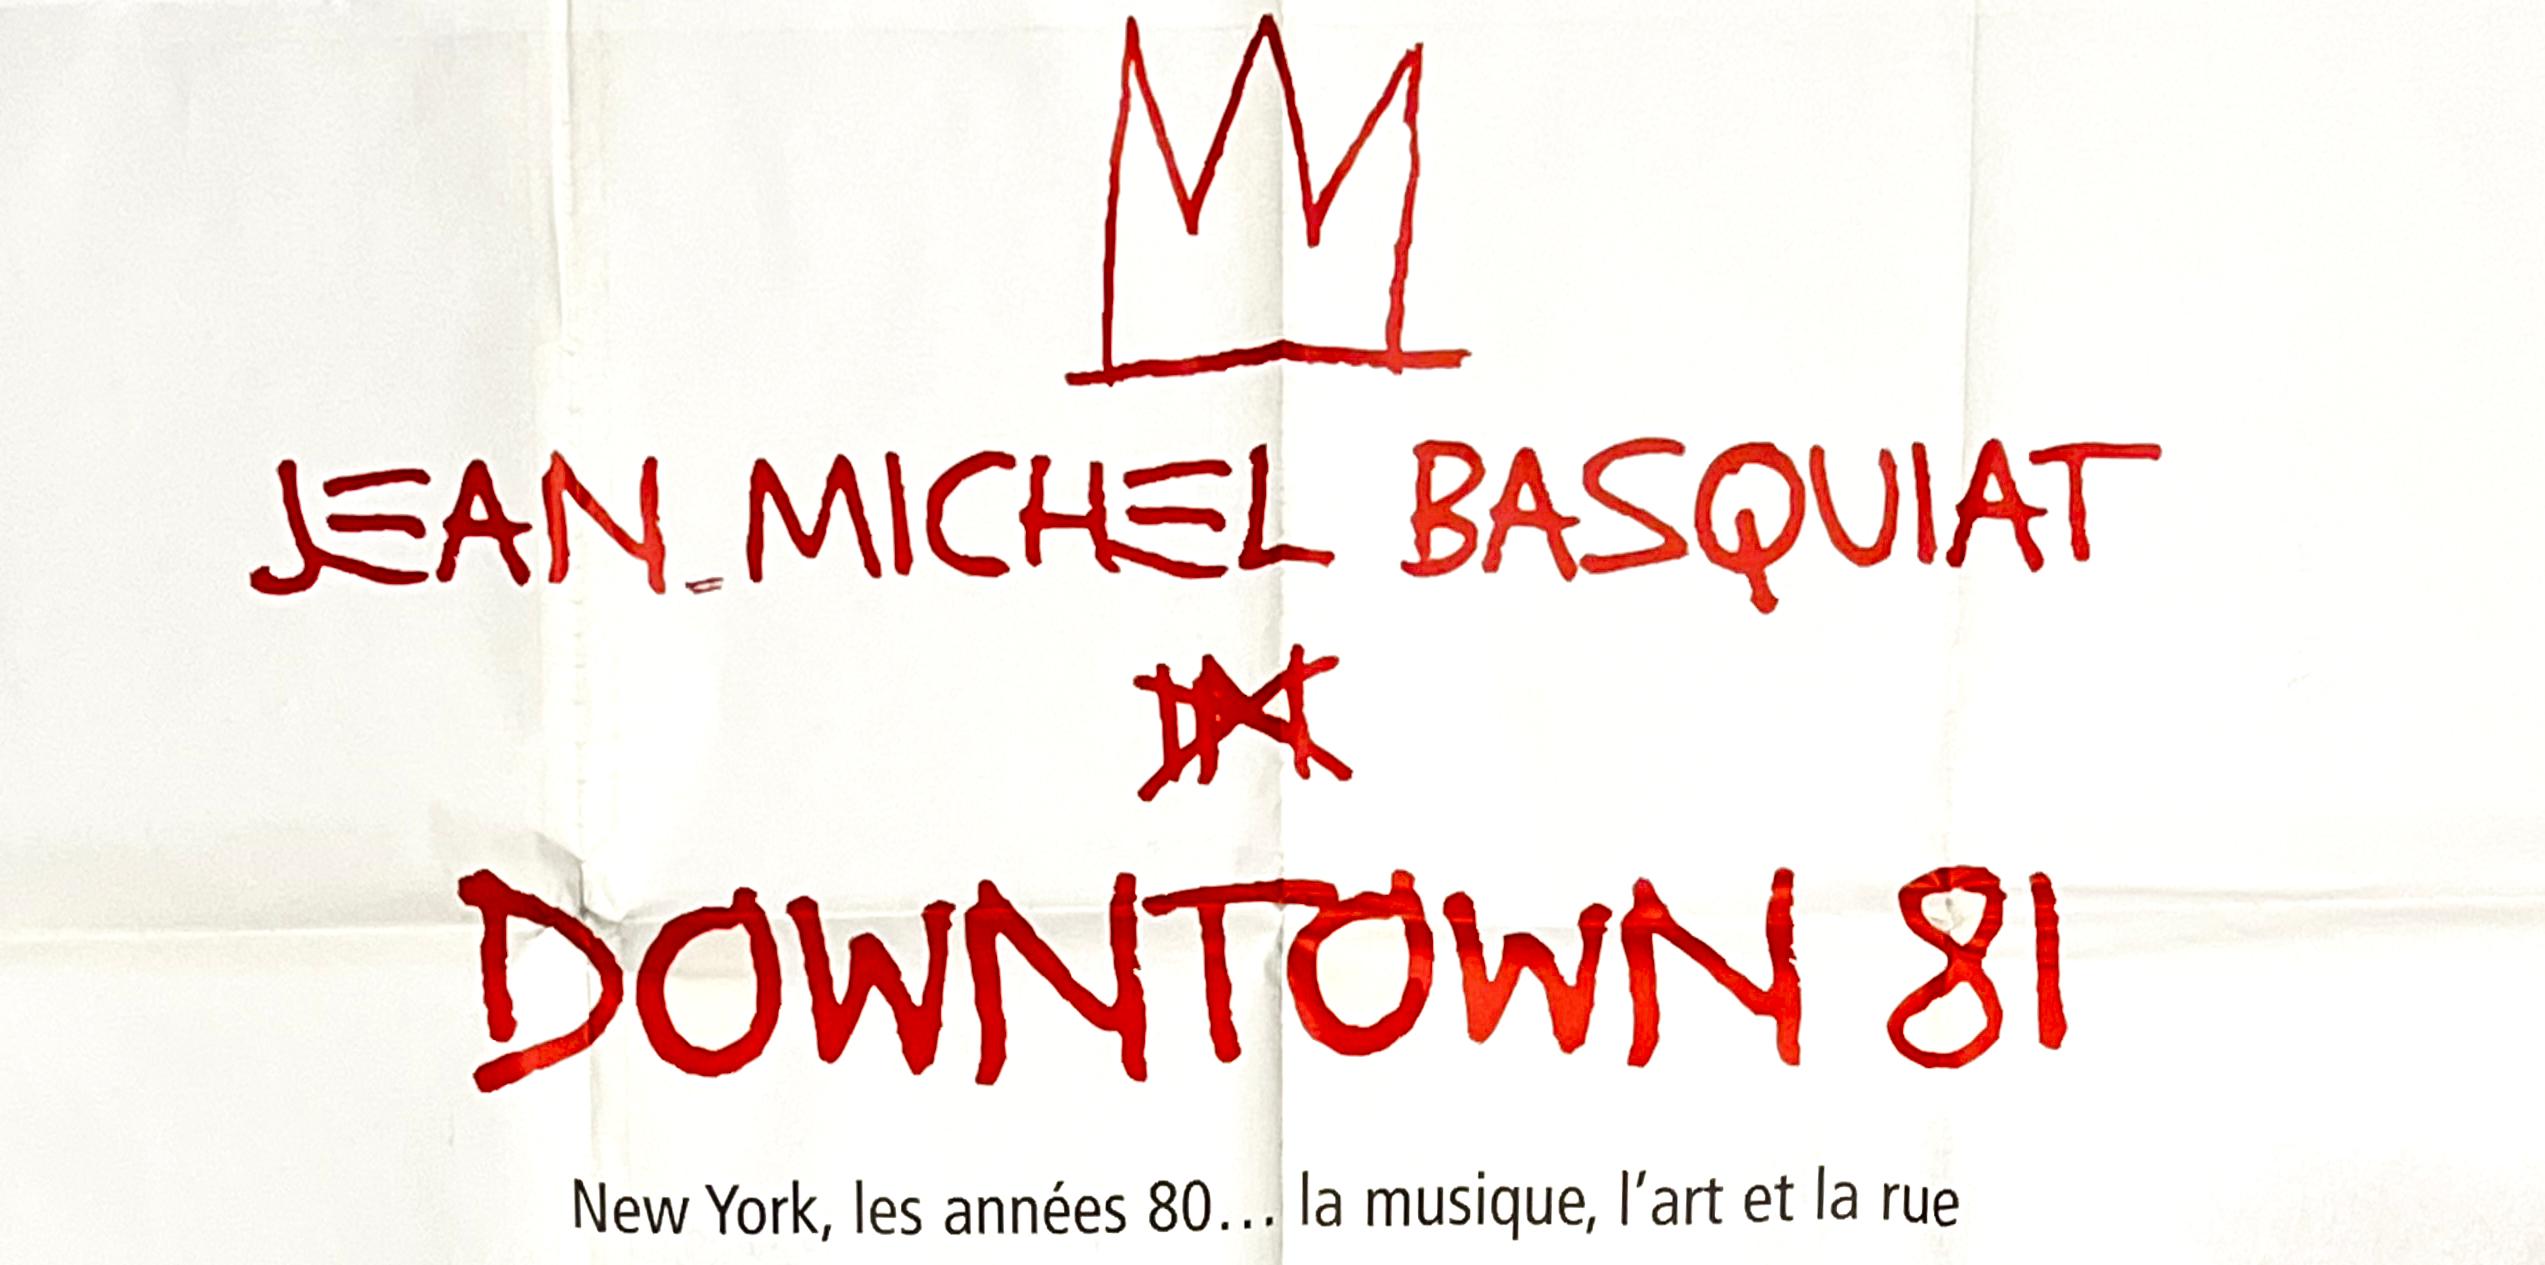 Basquiat Downtown 81 film poster (vintage Basquiat)  - Pop Art Print by Jean-Michel Basquiat